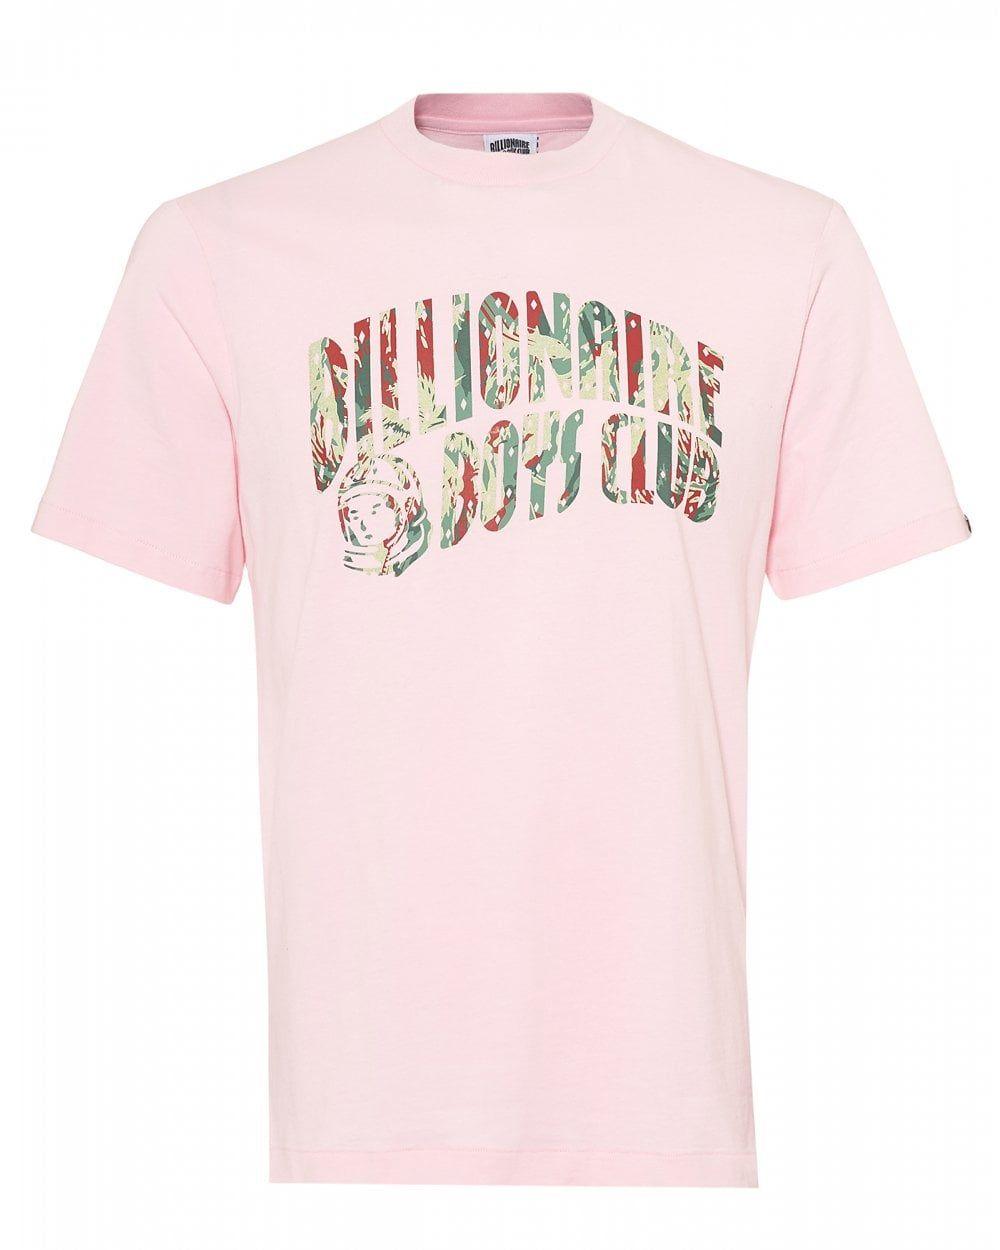 Pink T Logo - Billionaire Boys Club Mens Reflective Lizard Camo Logo T-Shirt, Pink Tee